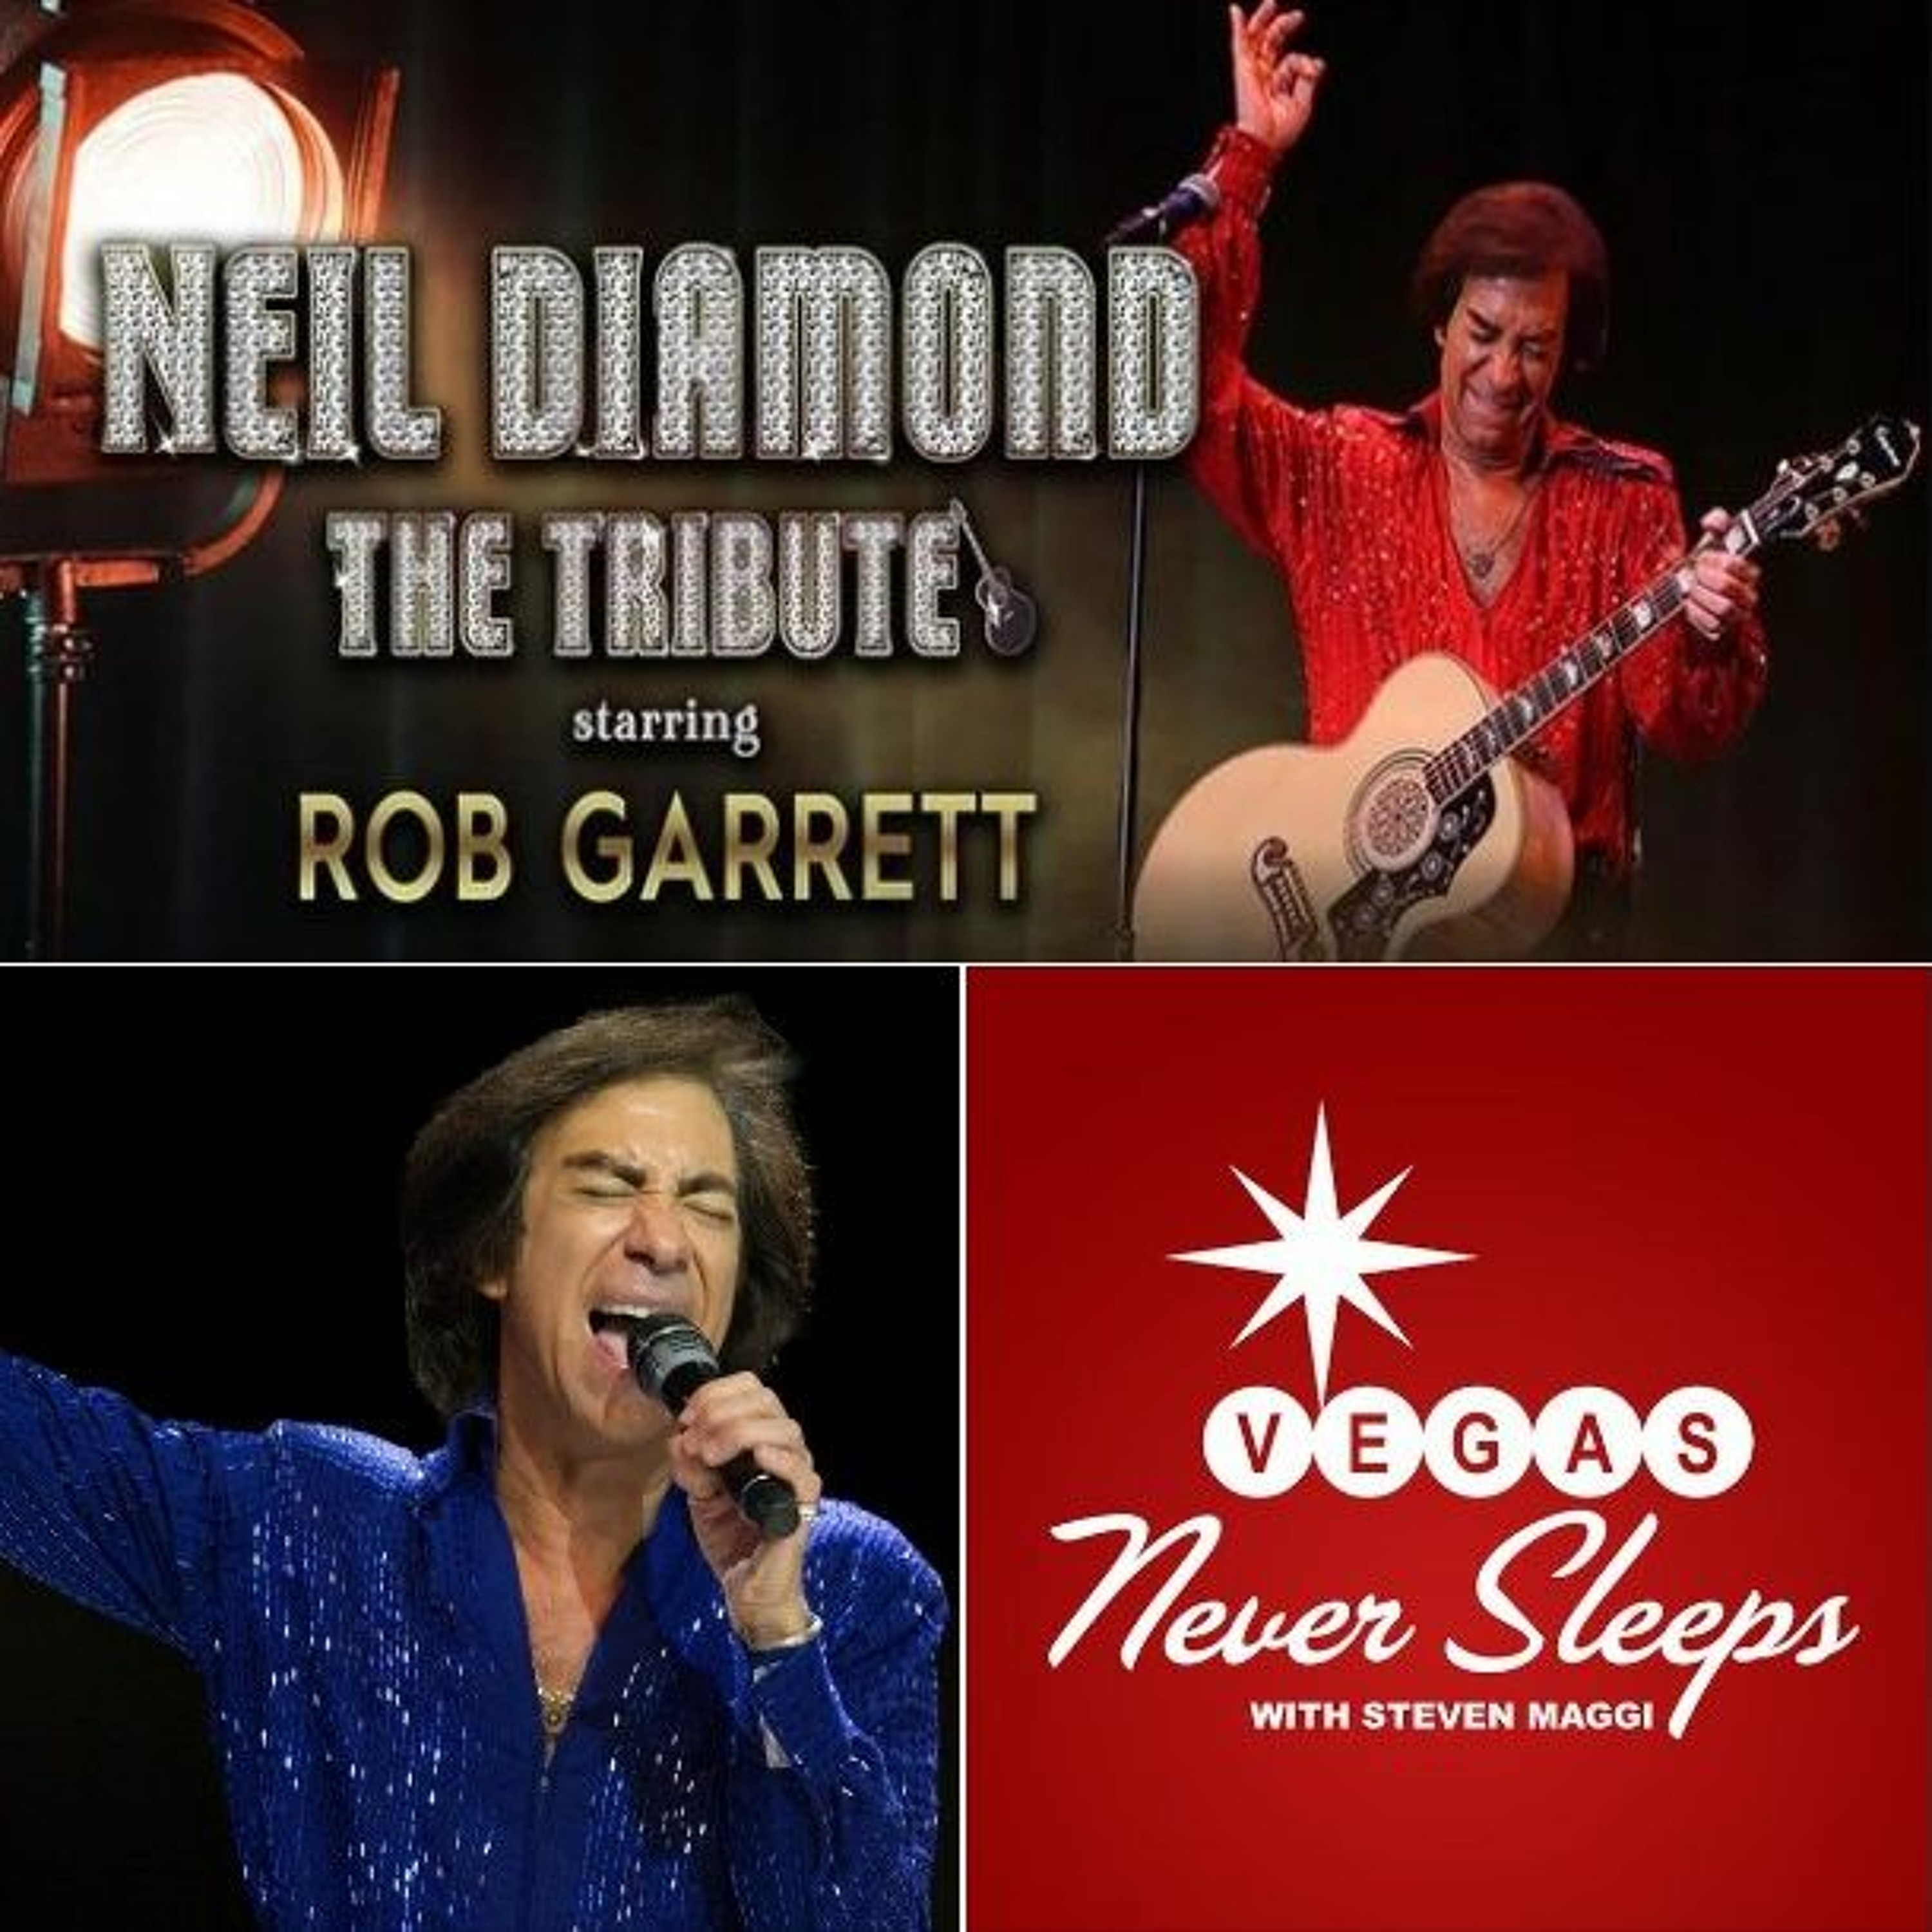 ”The Neil Diamond Tribute” - The Complete Rob Garrett Interview